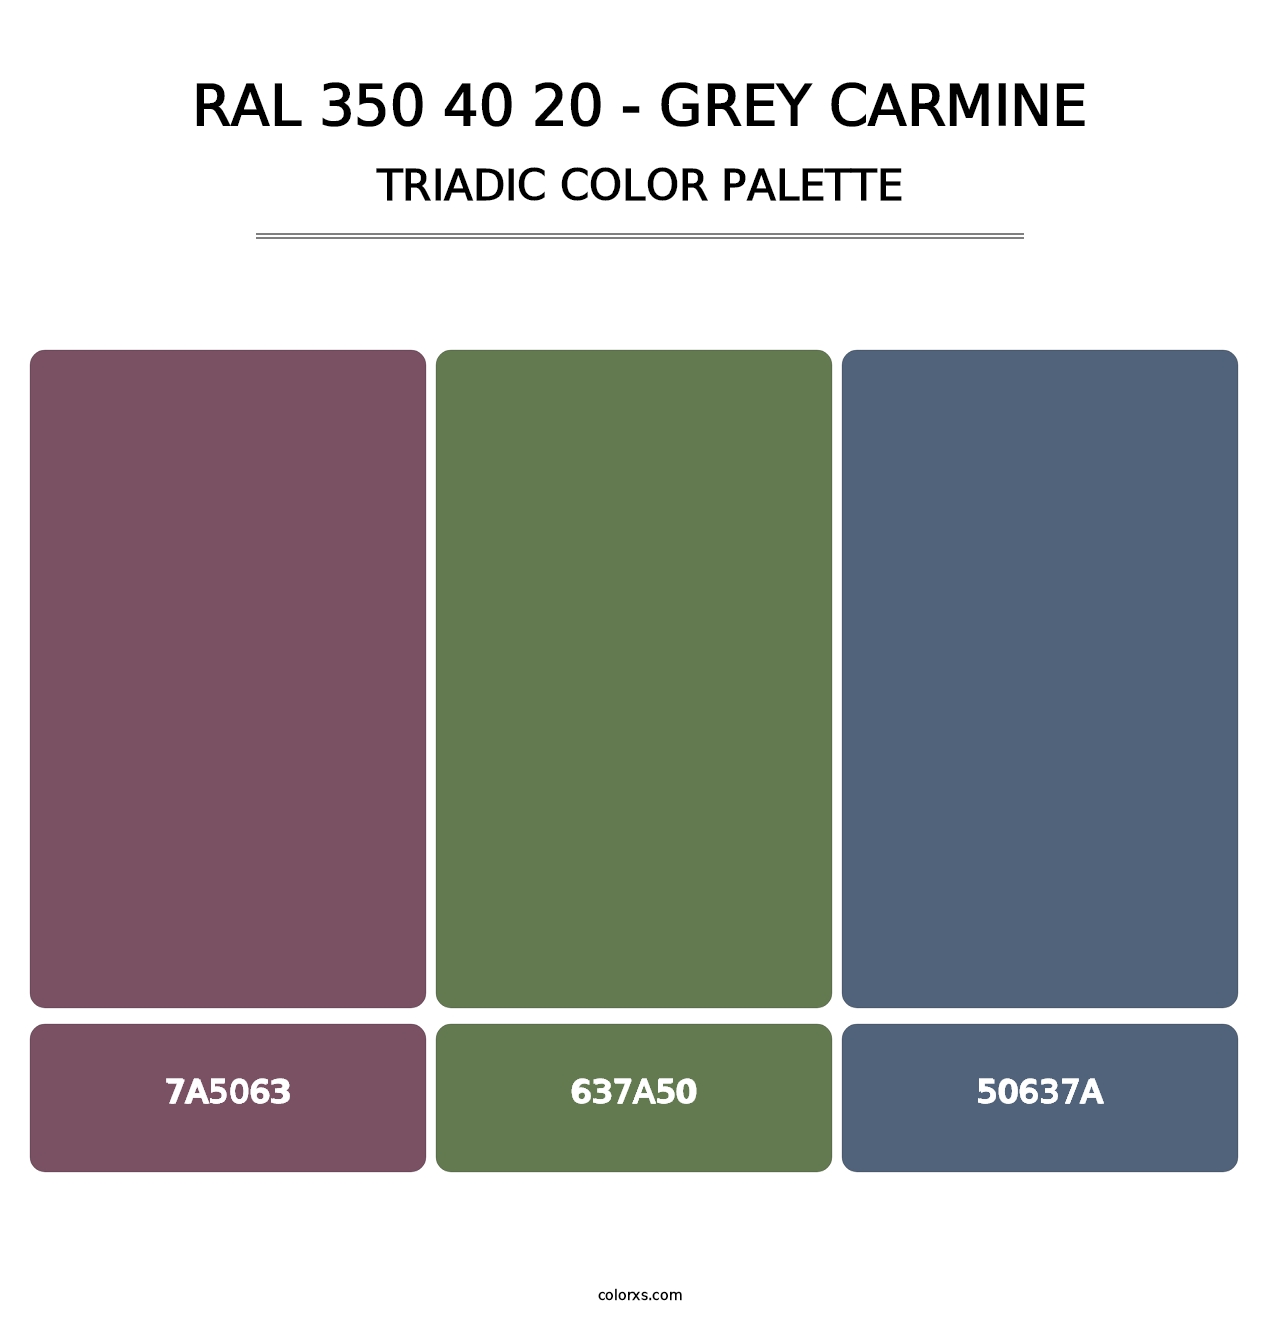 RAL 350 40 20 - Grey Carmine - Triadic Color Palette